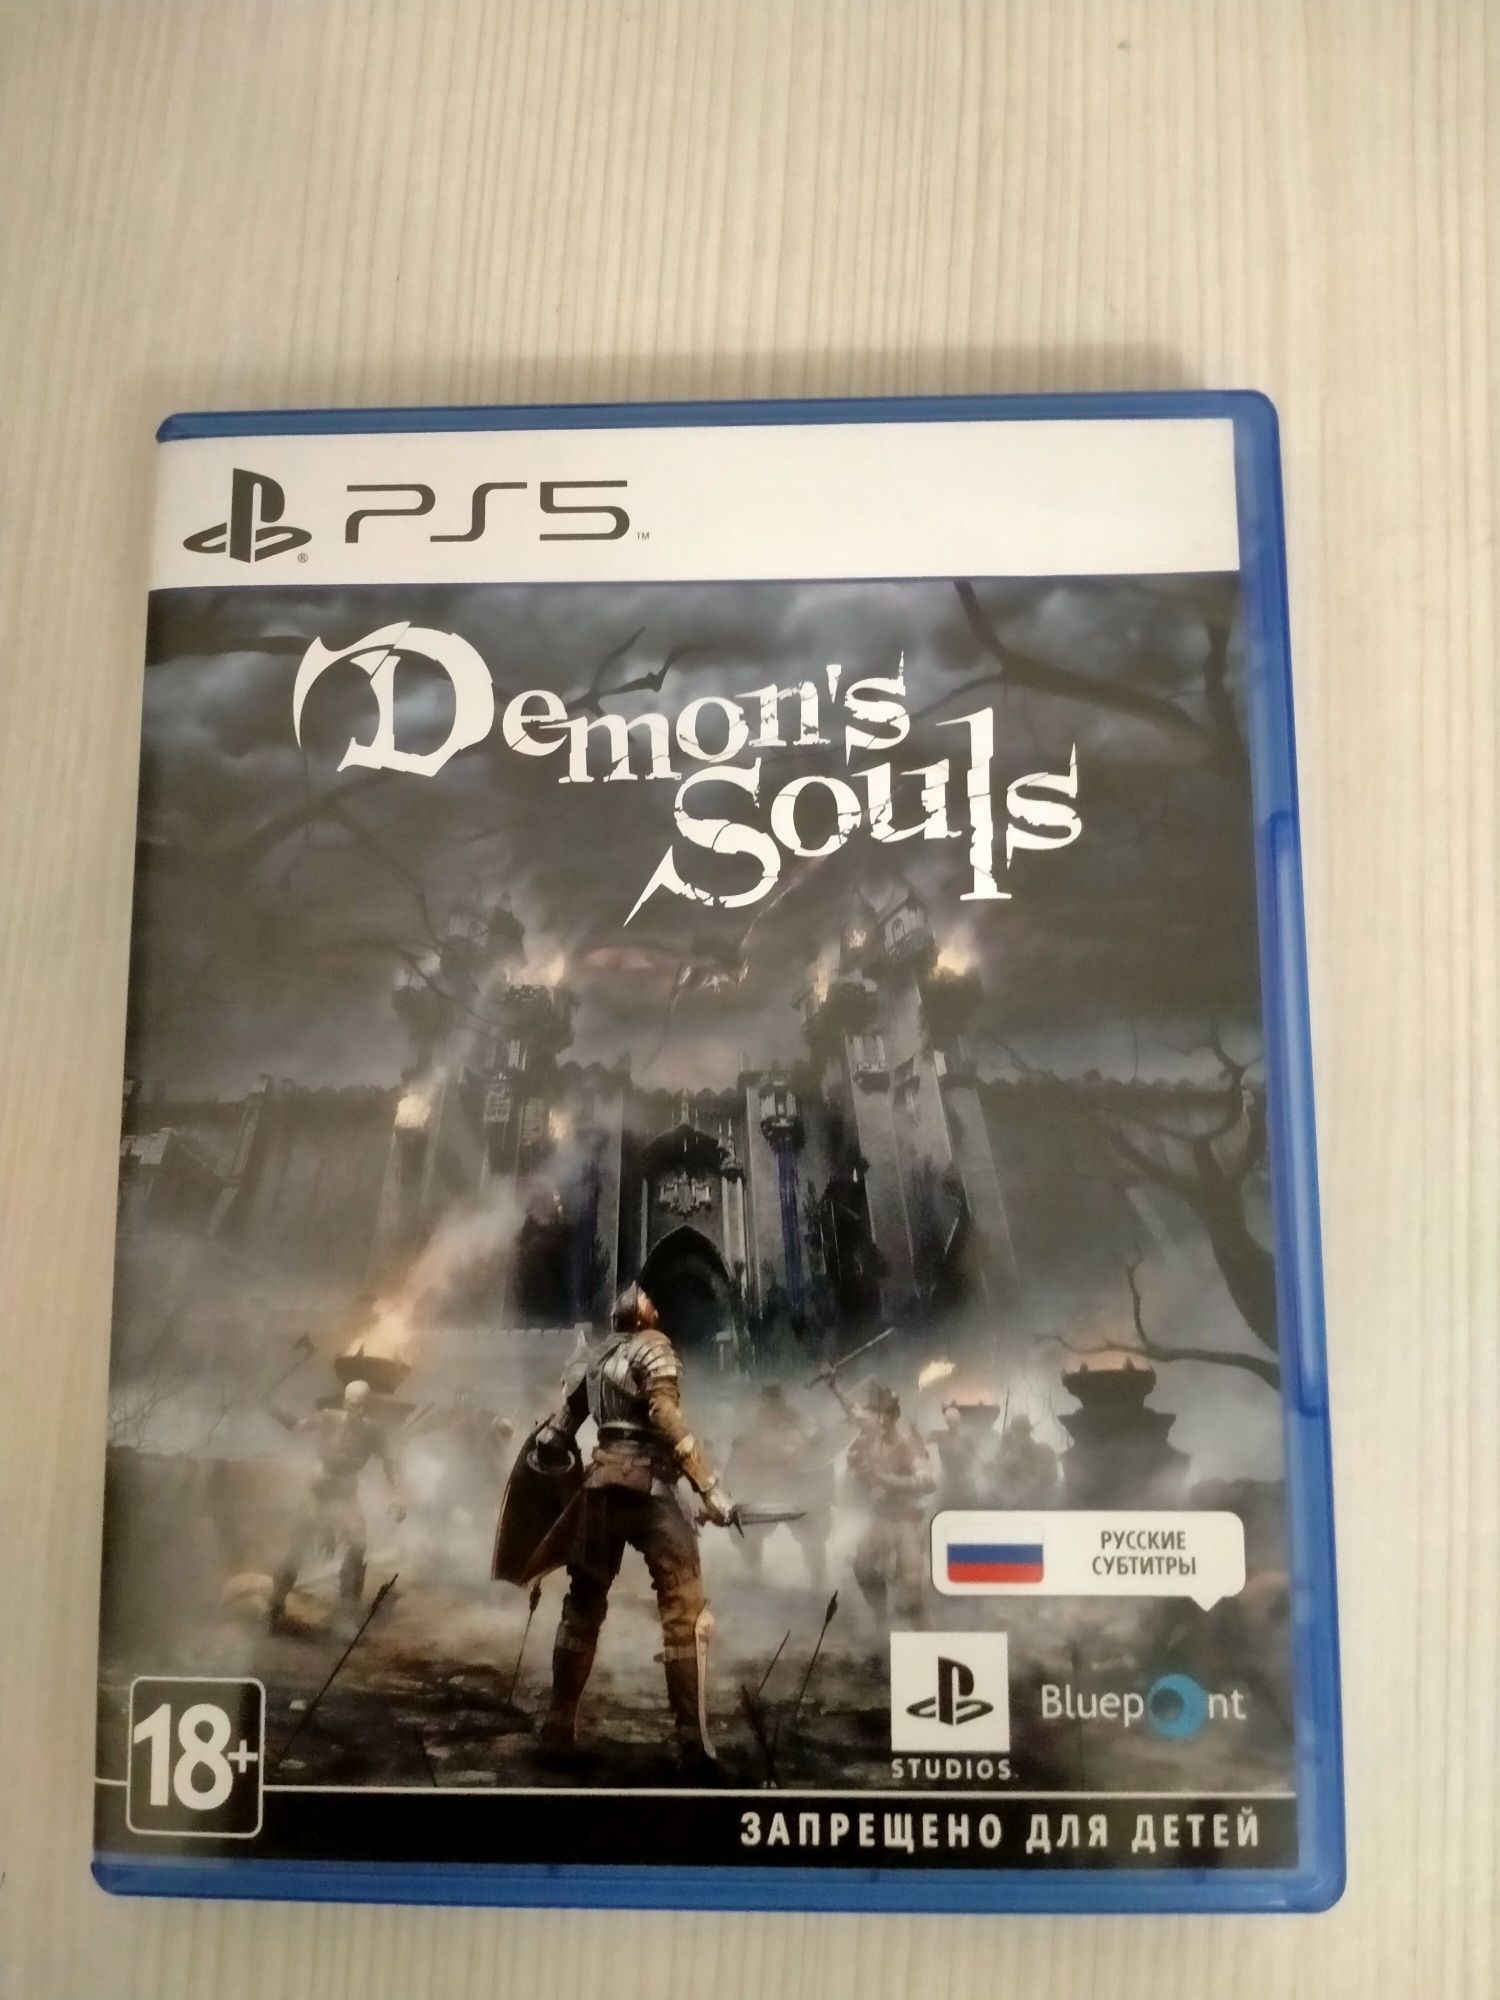 Игра Demon's Souls для пс 5